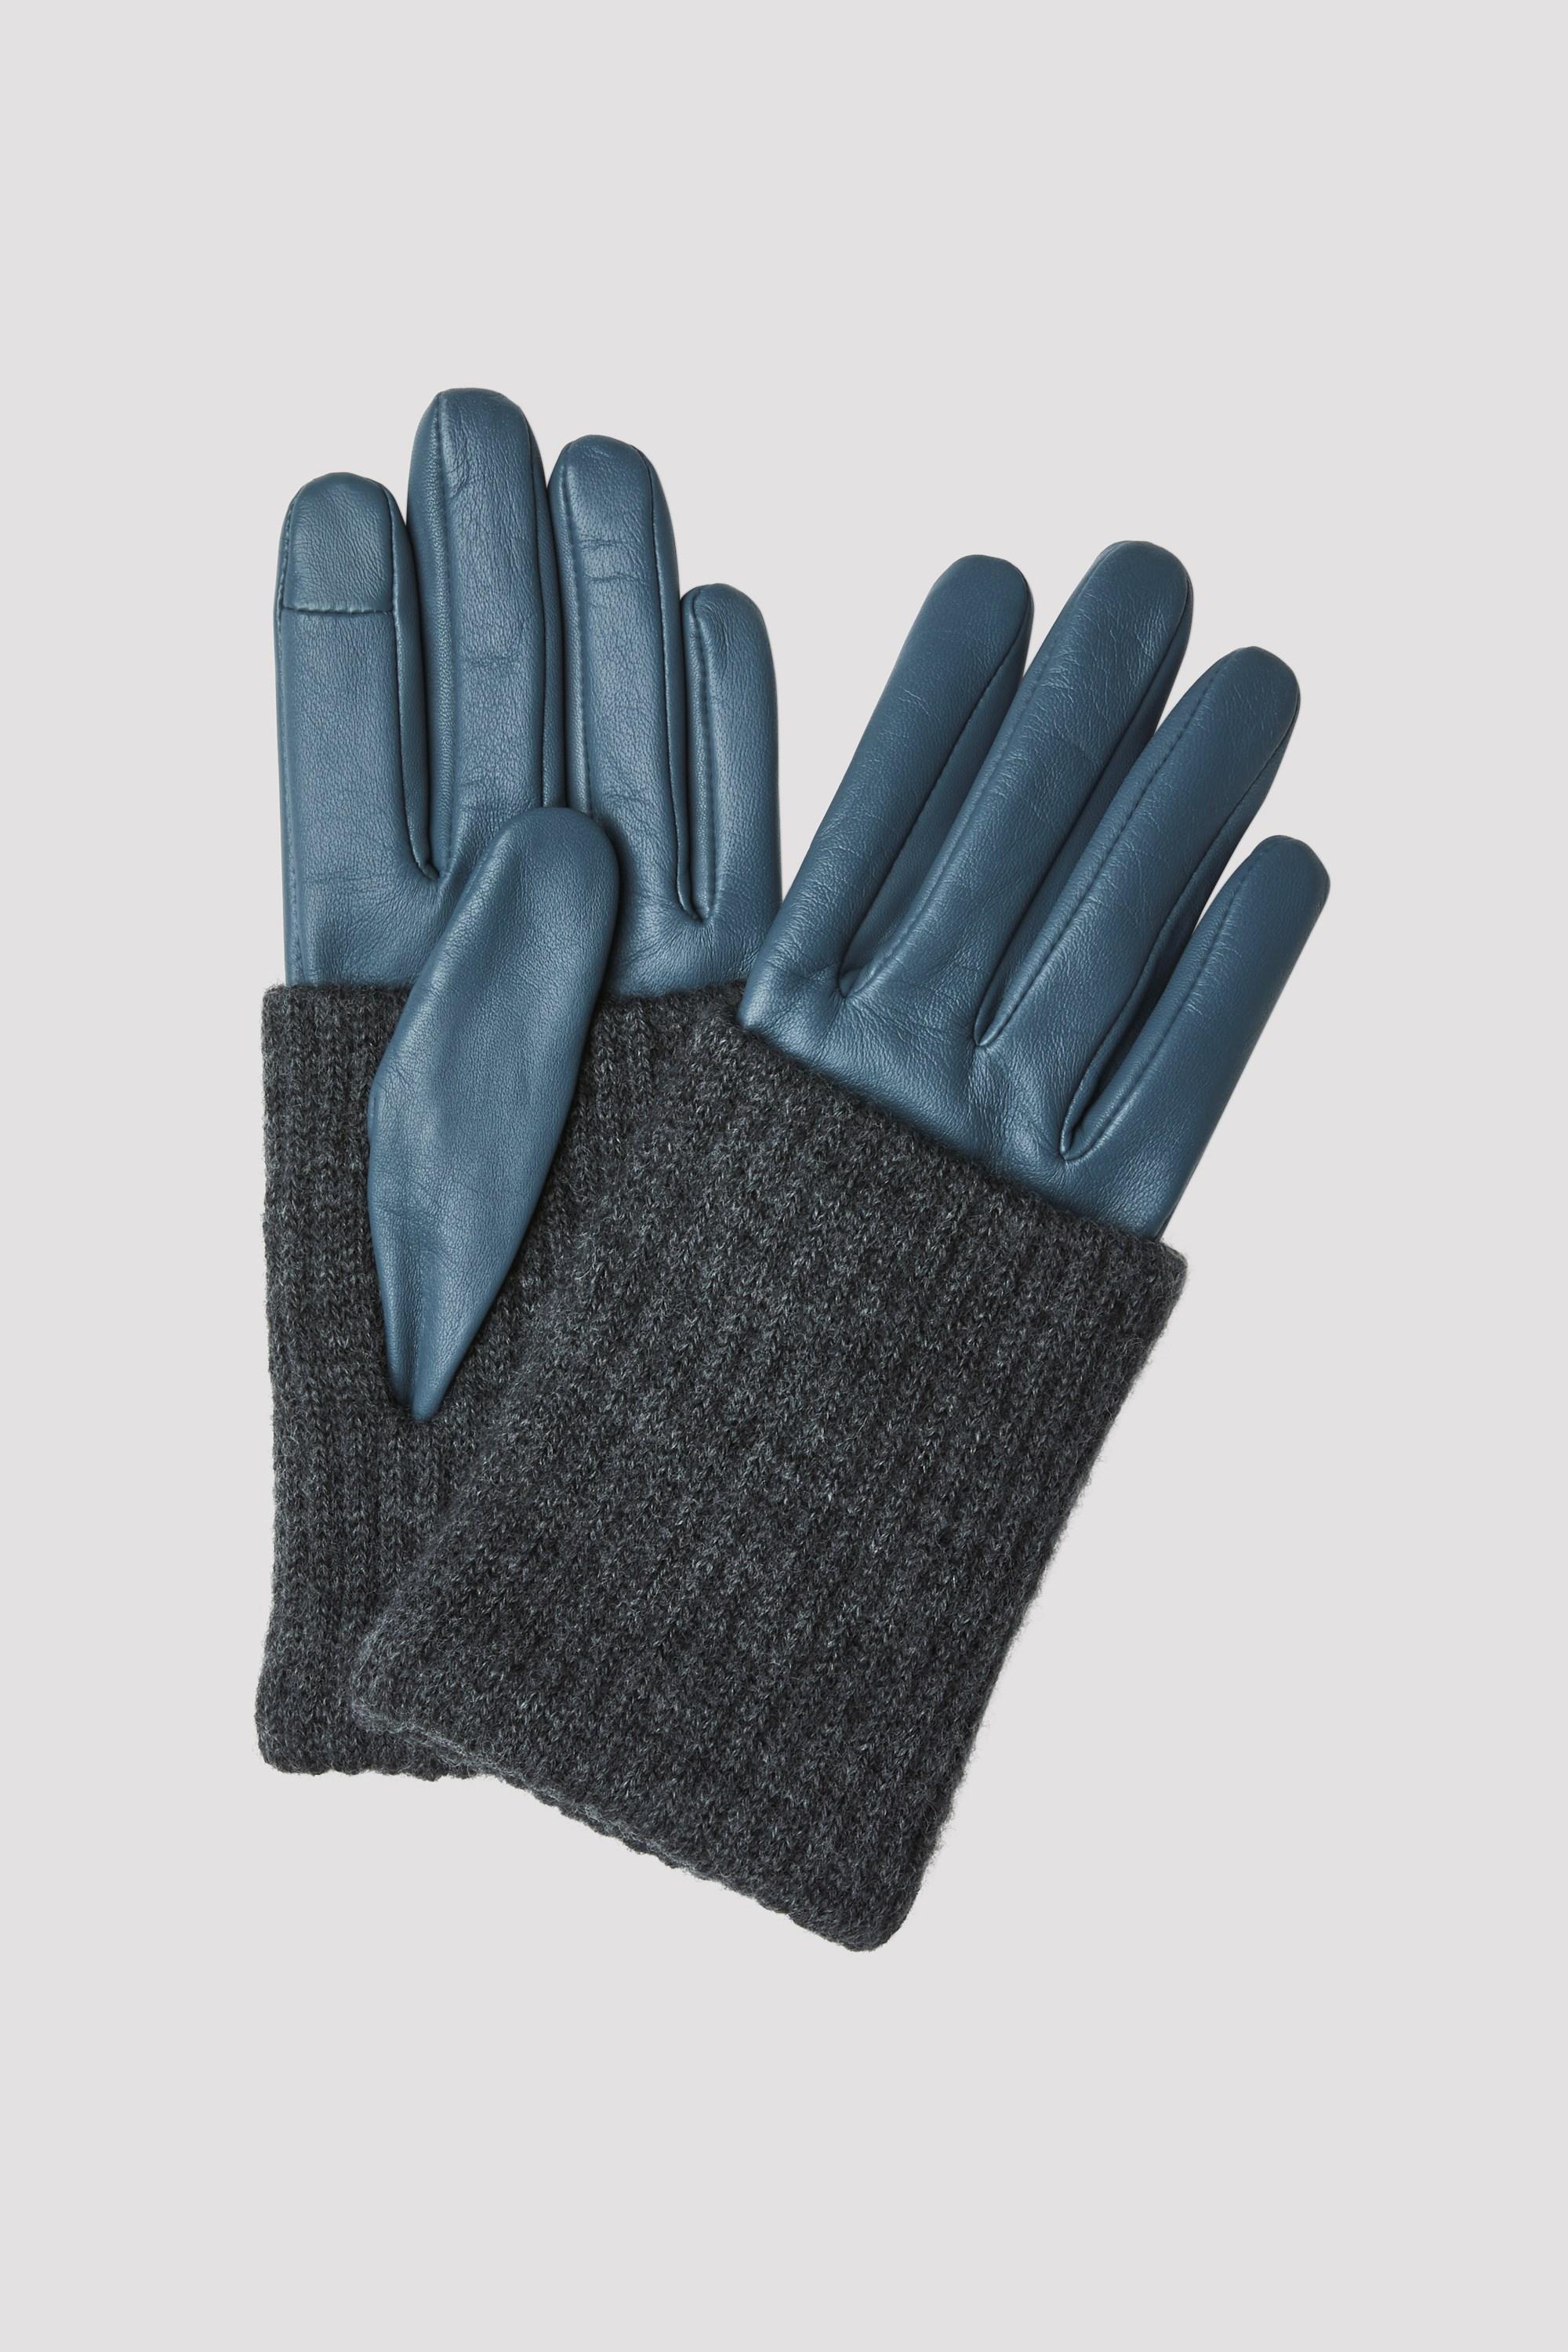 Filippa K Short Wool Rib Gloves in Blue Slate (Blue) - Lyst